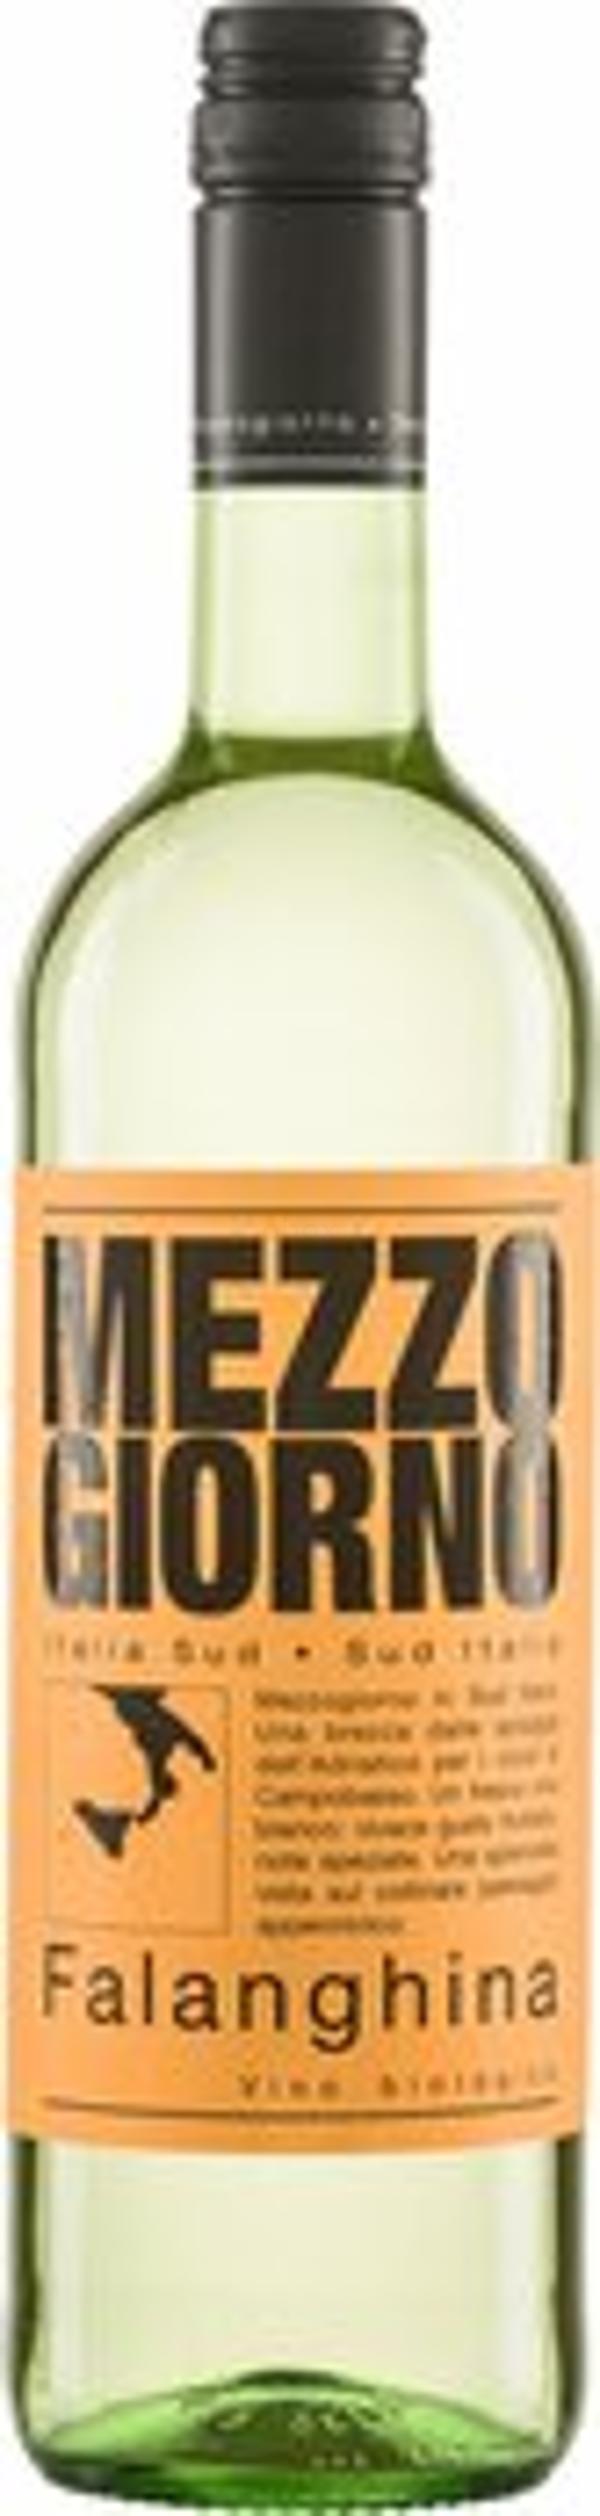 Produktfoto zu Mezziogiorno Falanghina Weißwein 0.75L